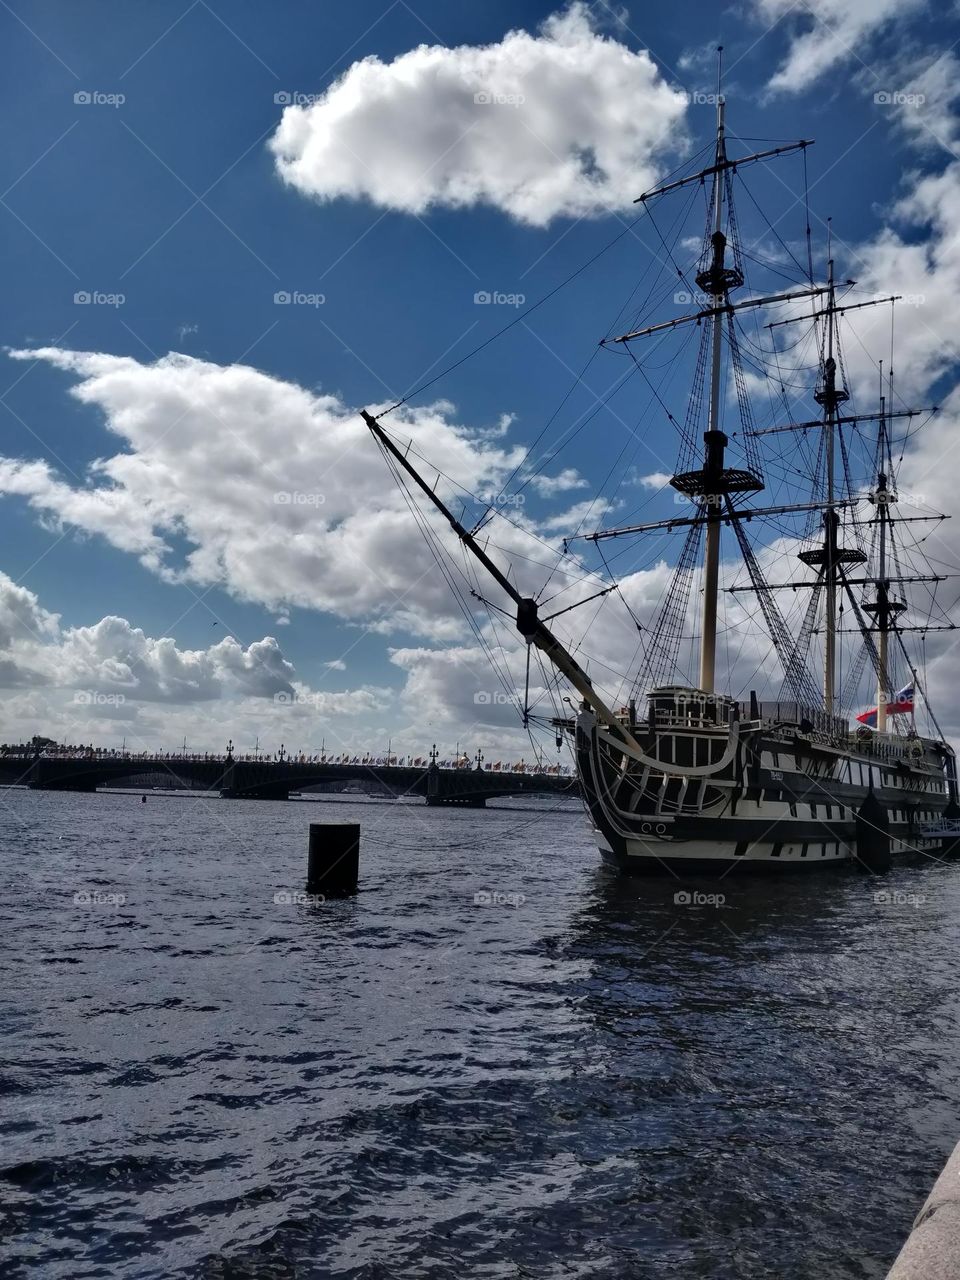 Old war ship in the sea